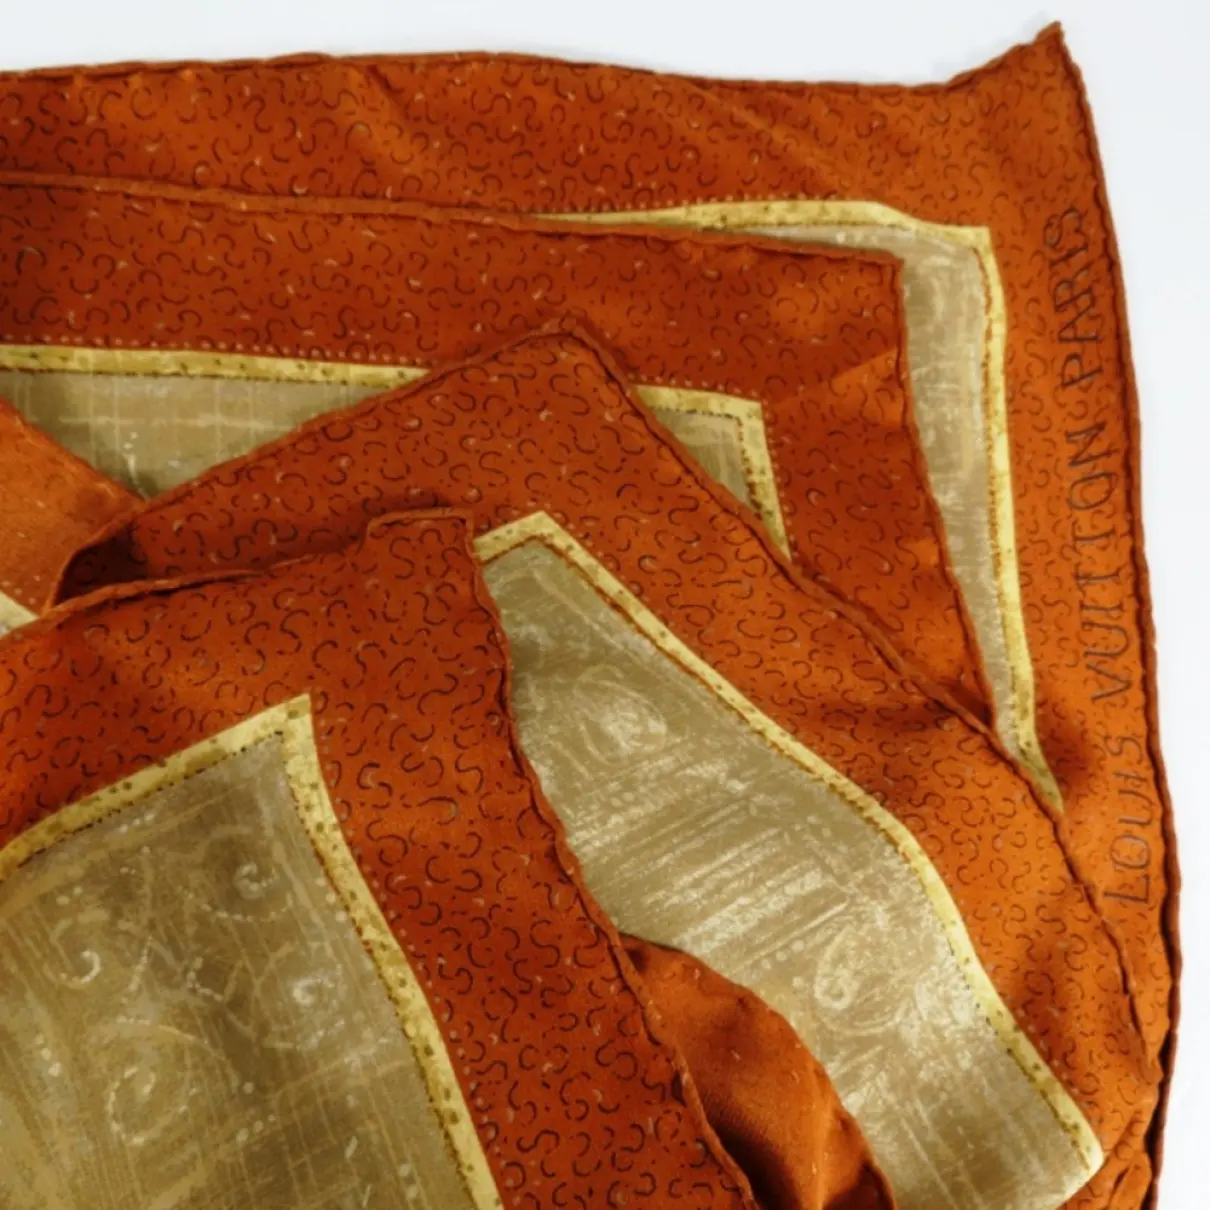 Silk handkerchief Louis Vuitton - Vintage